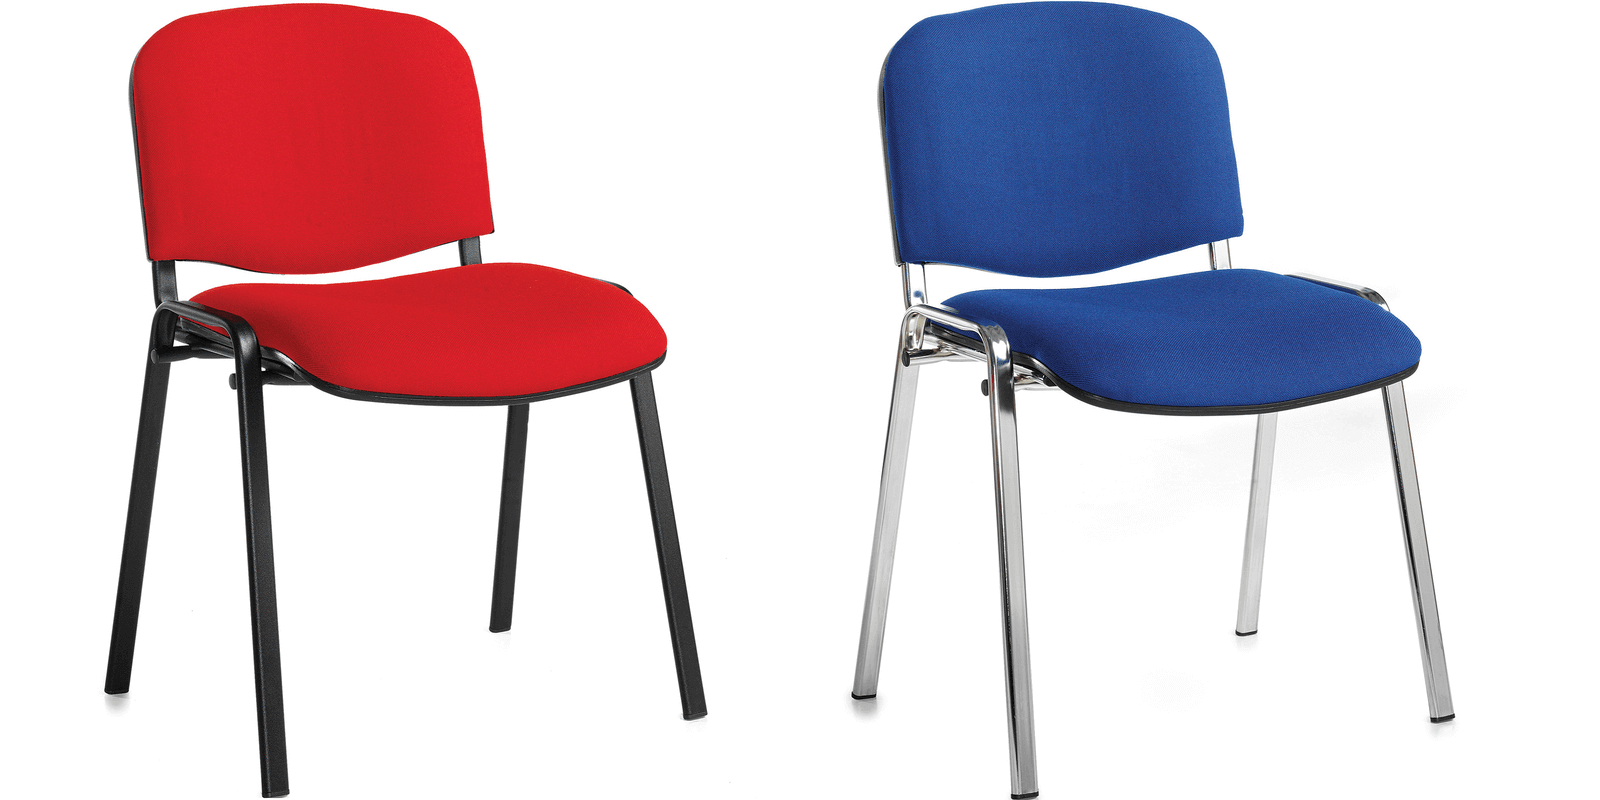 Taurus Meeting Room Chairs